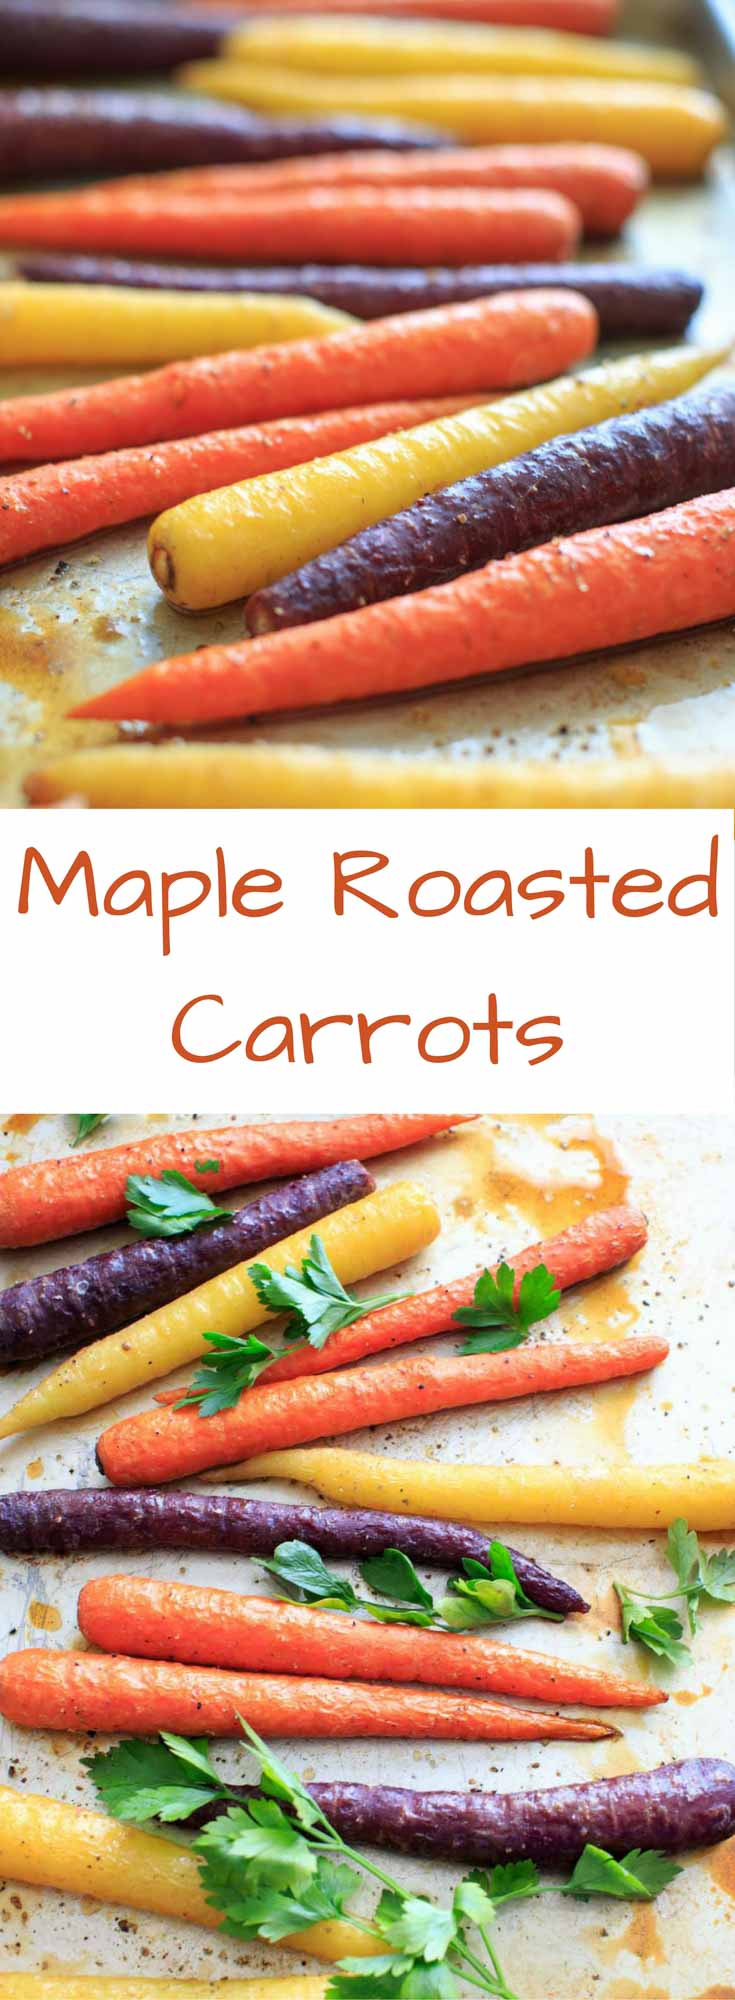 Maple Roasted Carrots - vegan, gluten-free, paleo, under 30 minutes